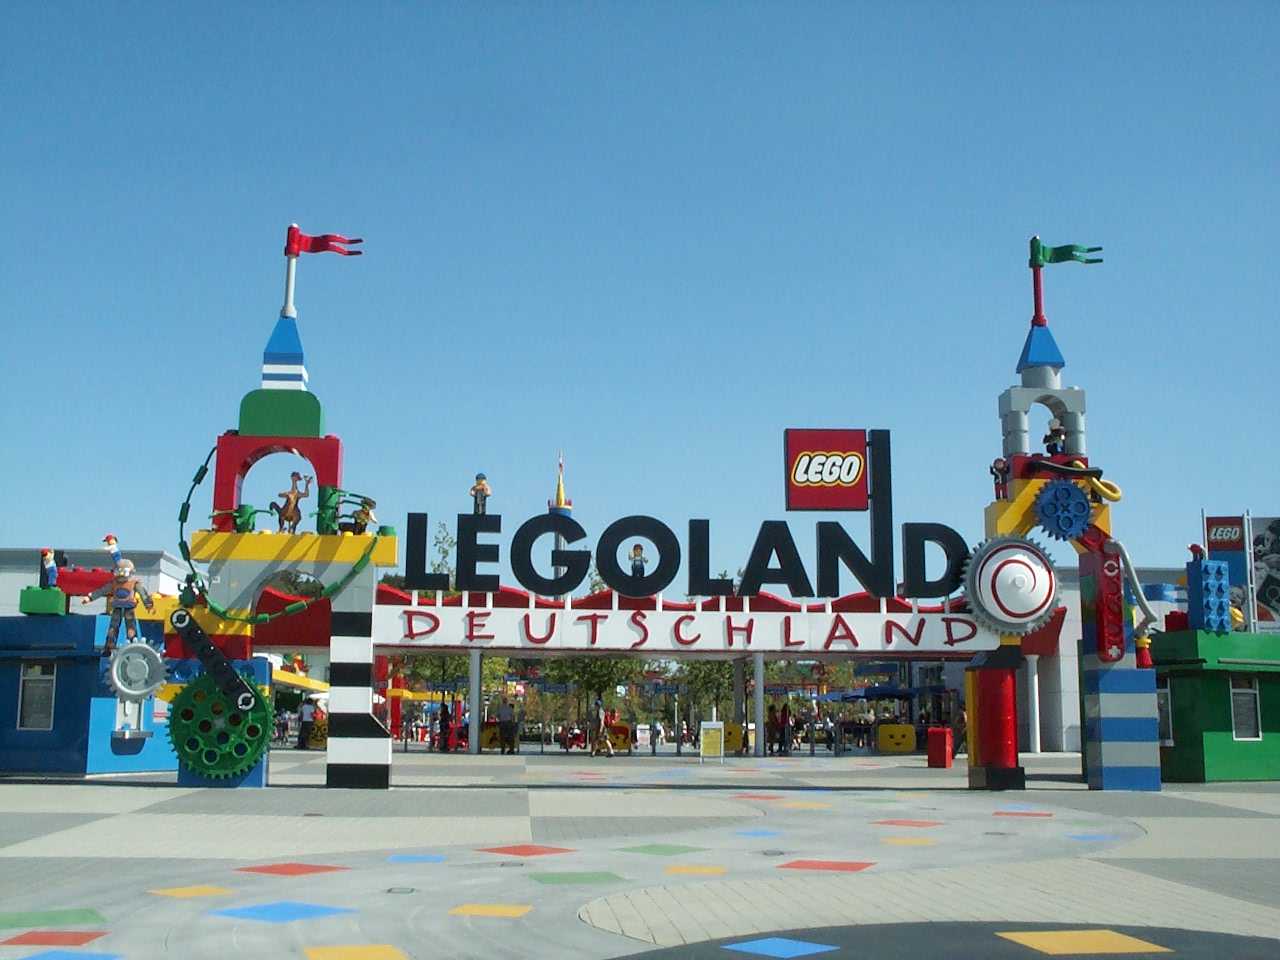 Bild - Legoland Deutschland2.jpg | Lego Wiki | FANDOM powered by Wikia